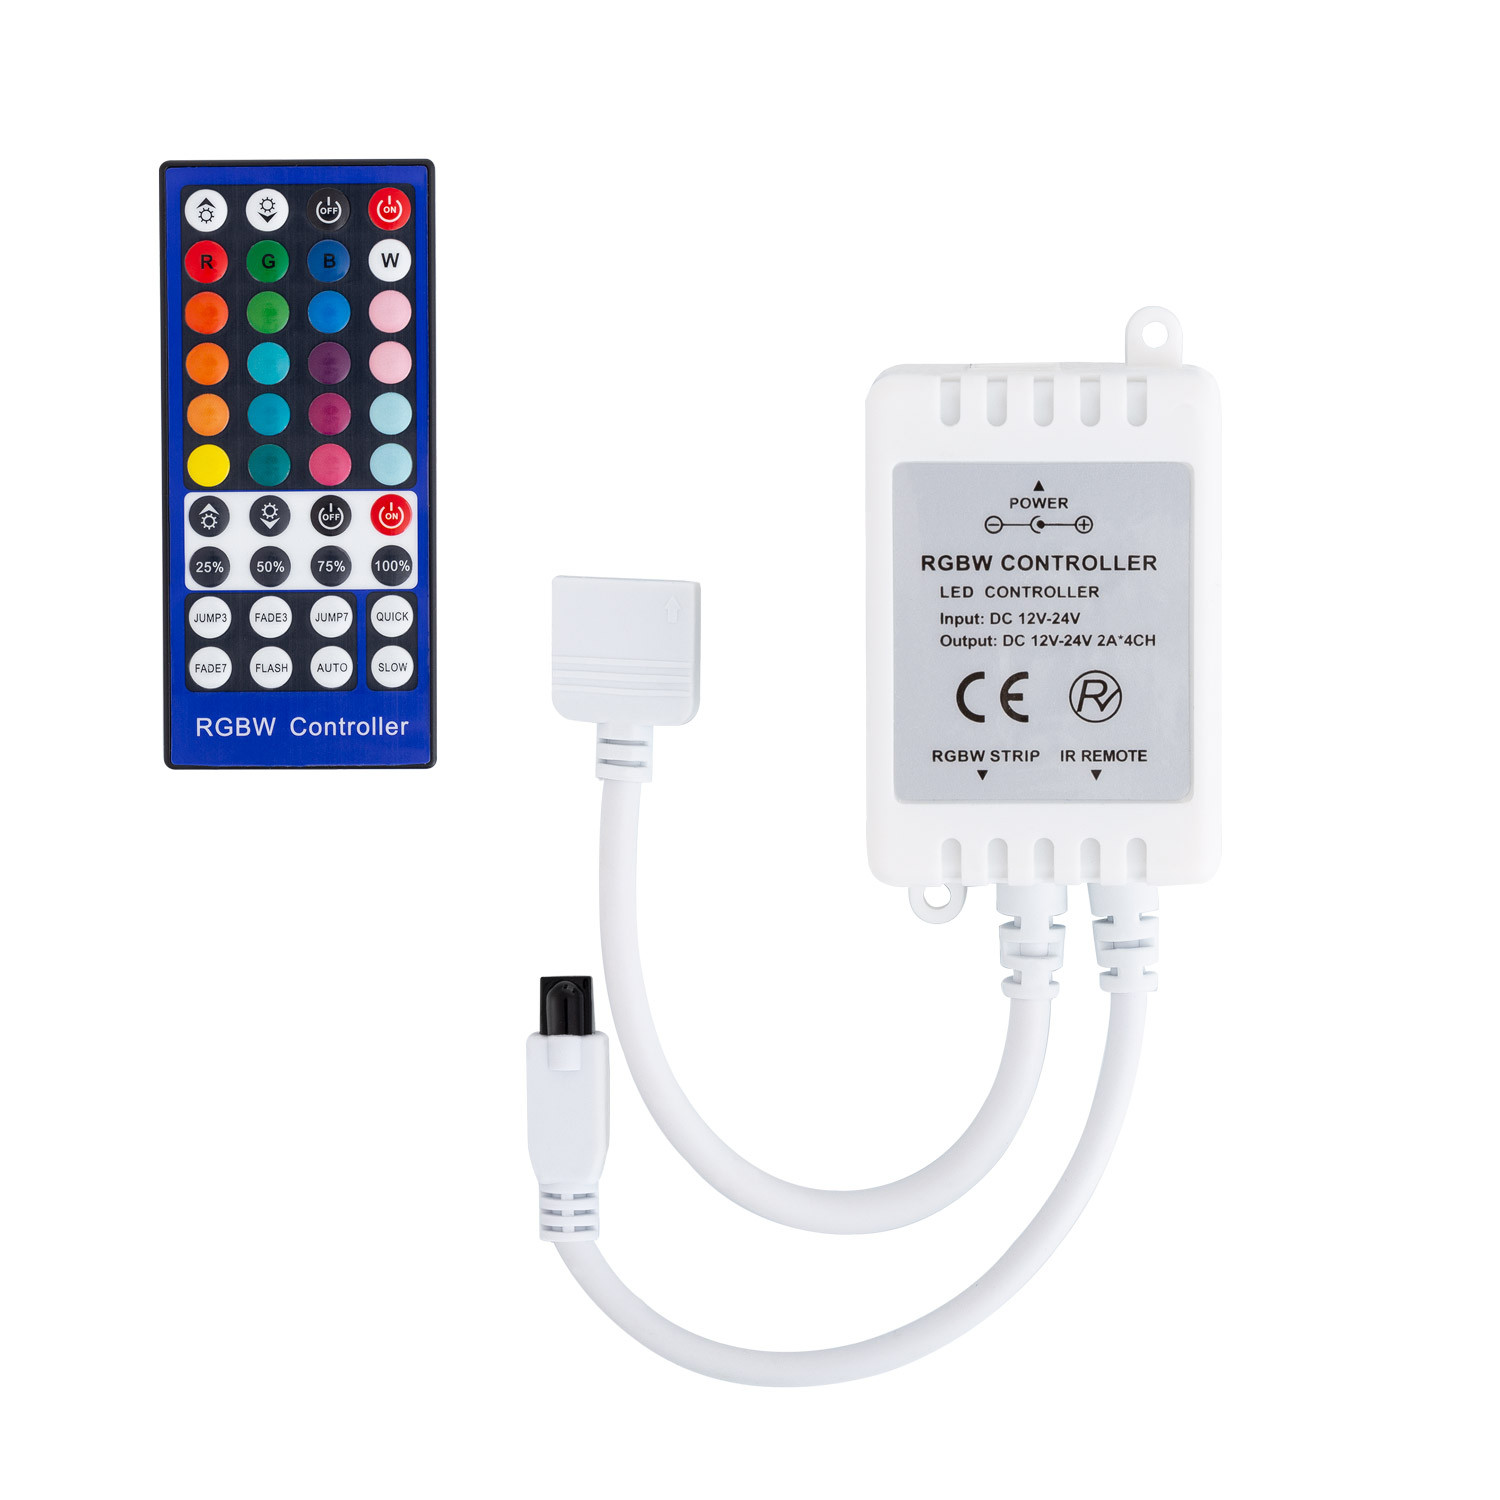 Controleur, Ruban LED, RGBW, 12V, Dimmable, Teleacommande